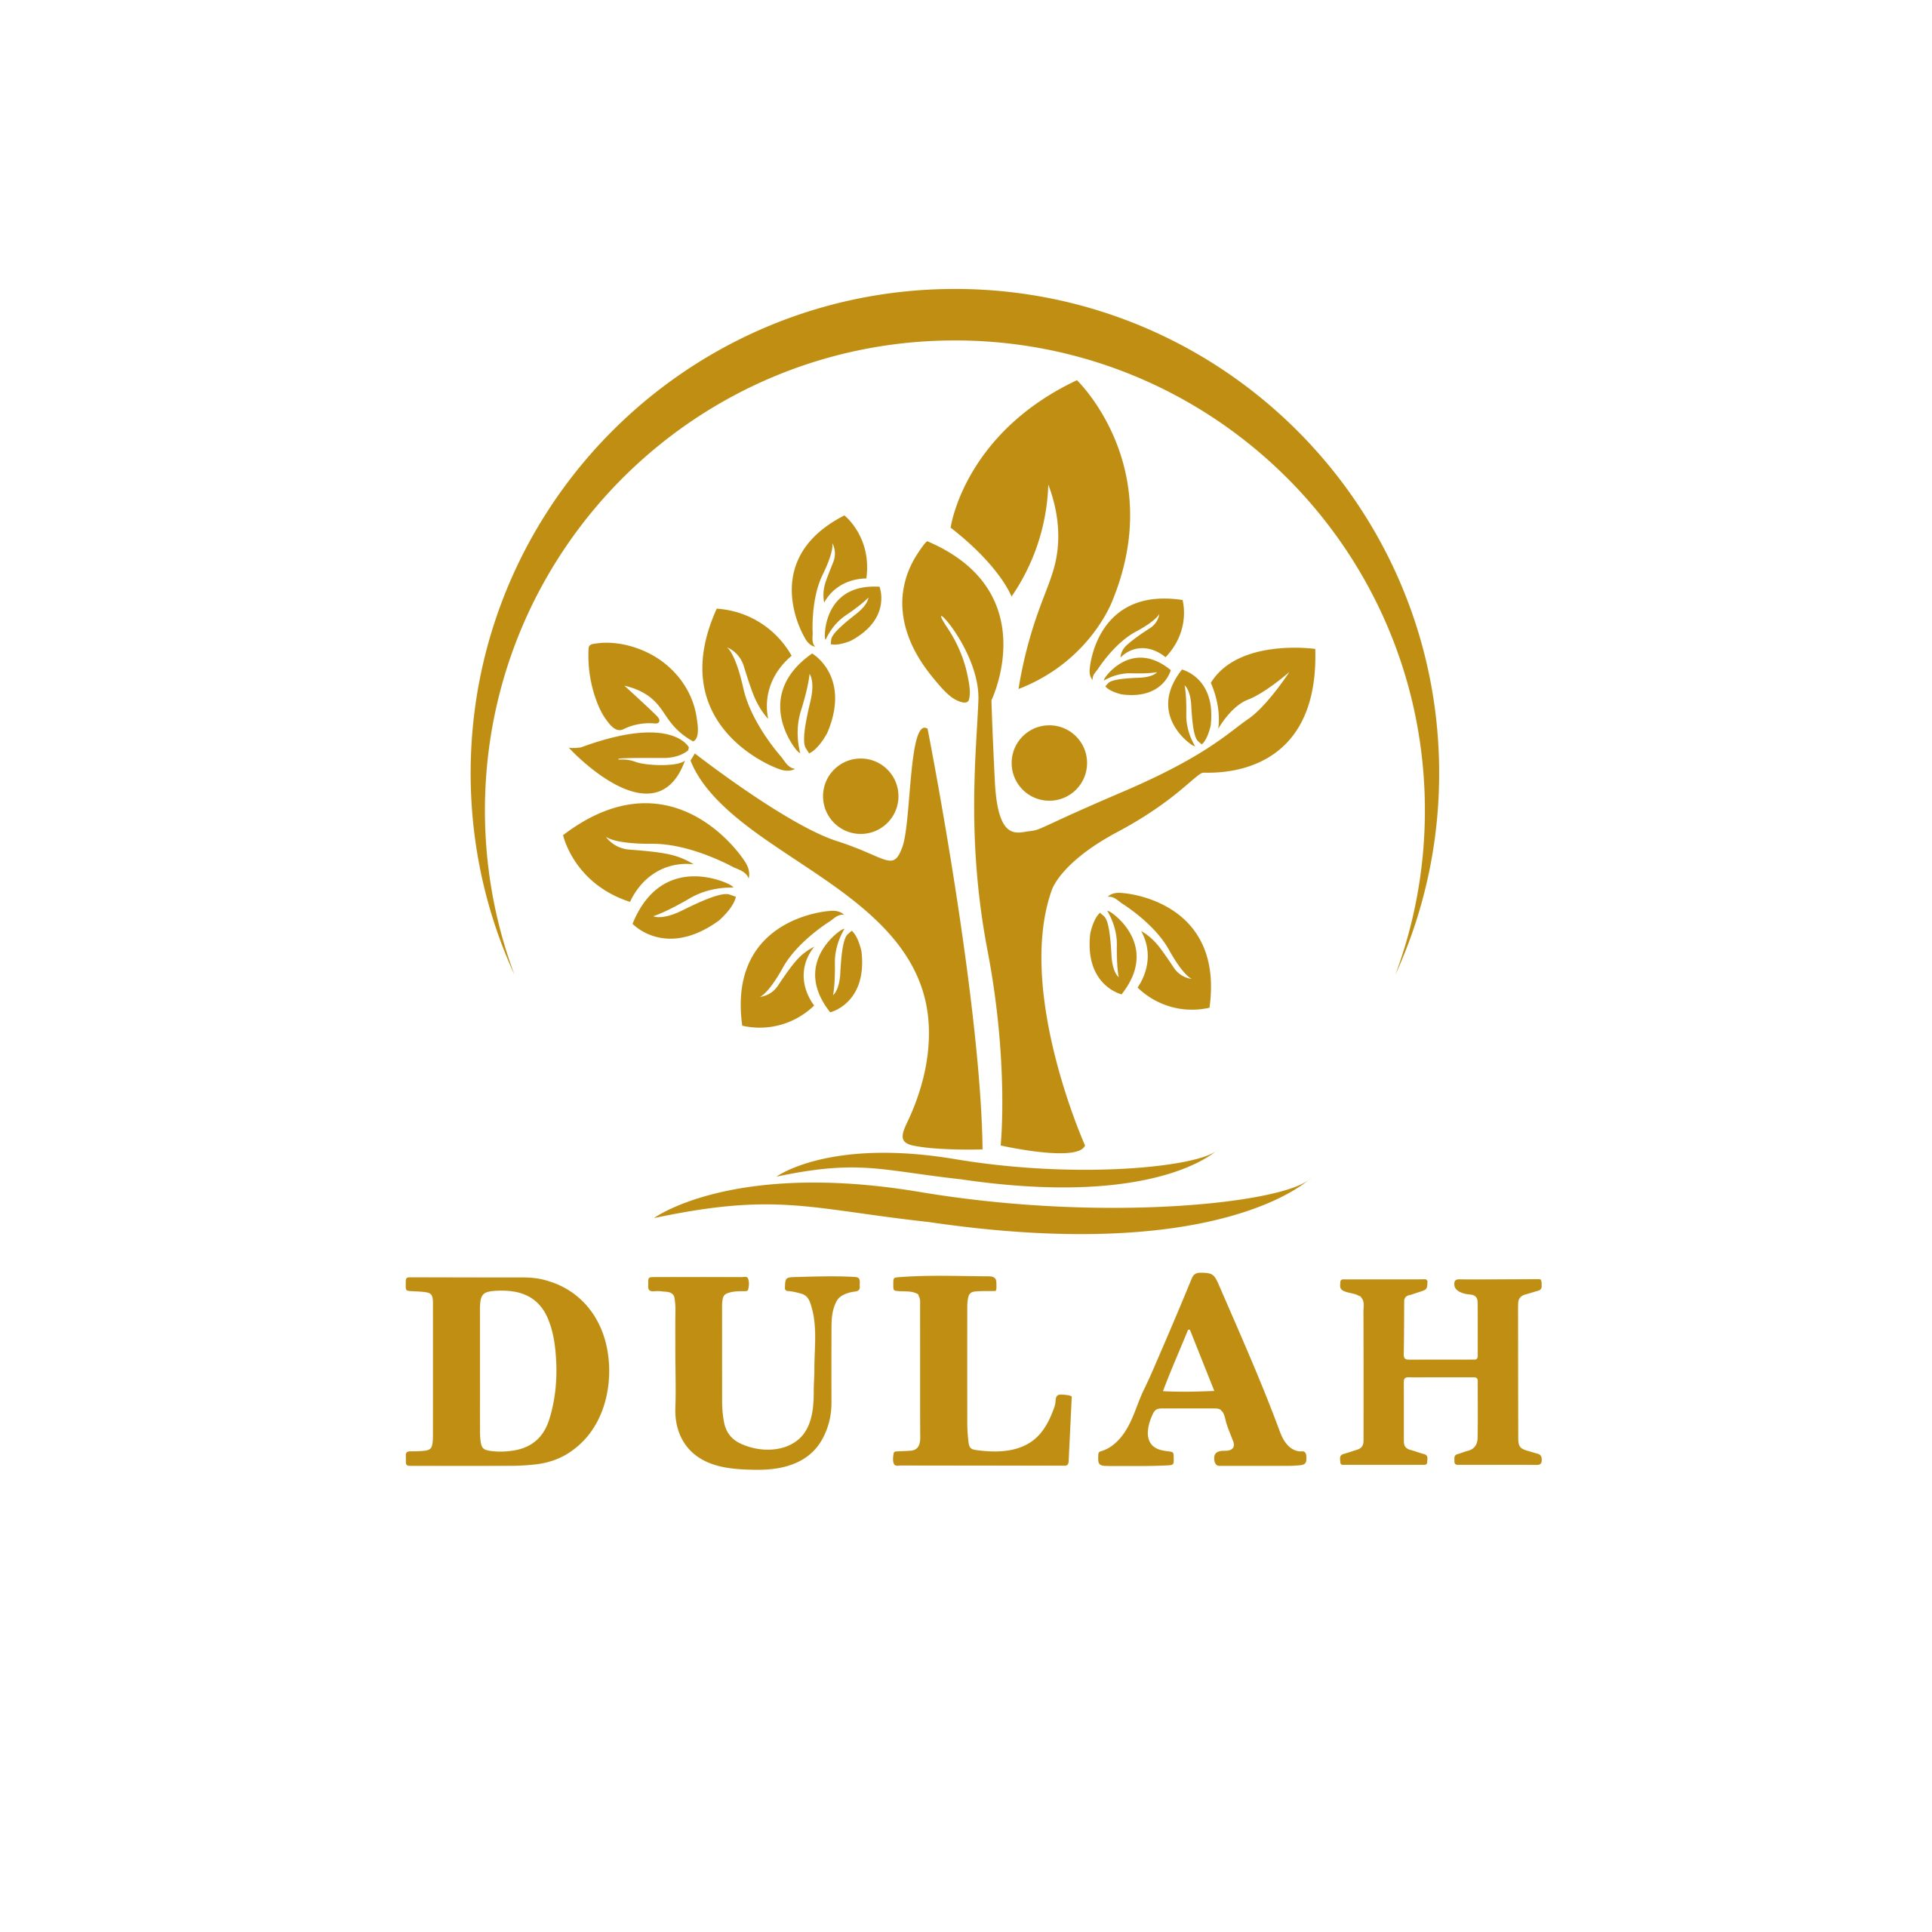 DULAH